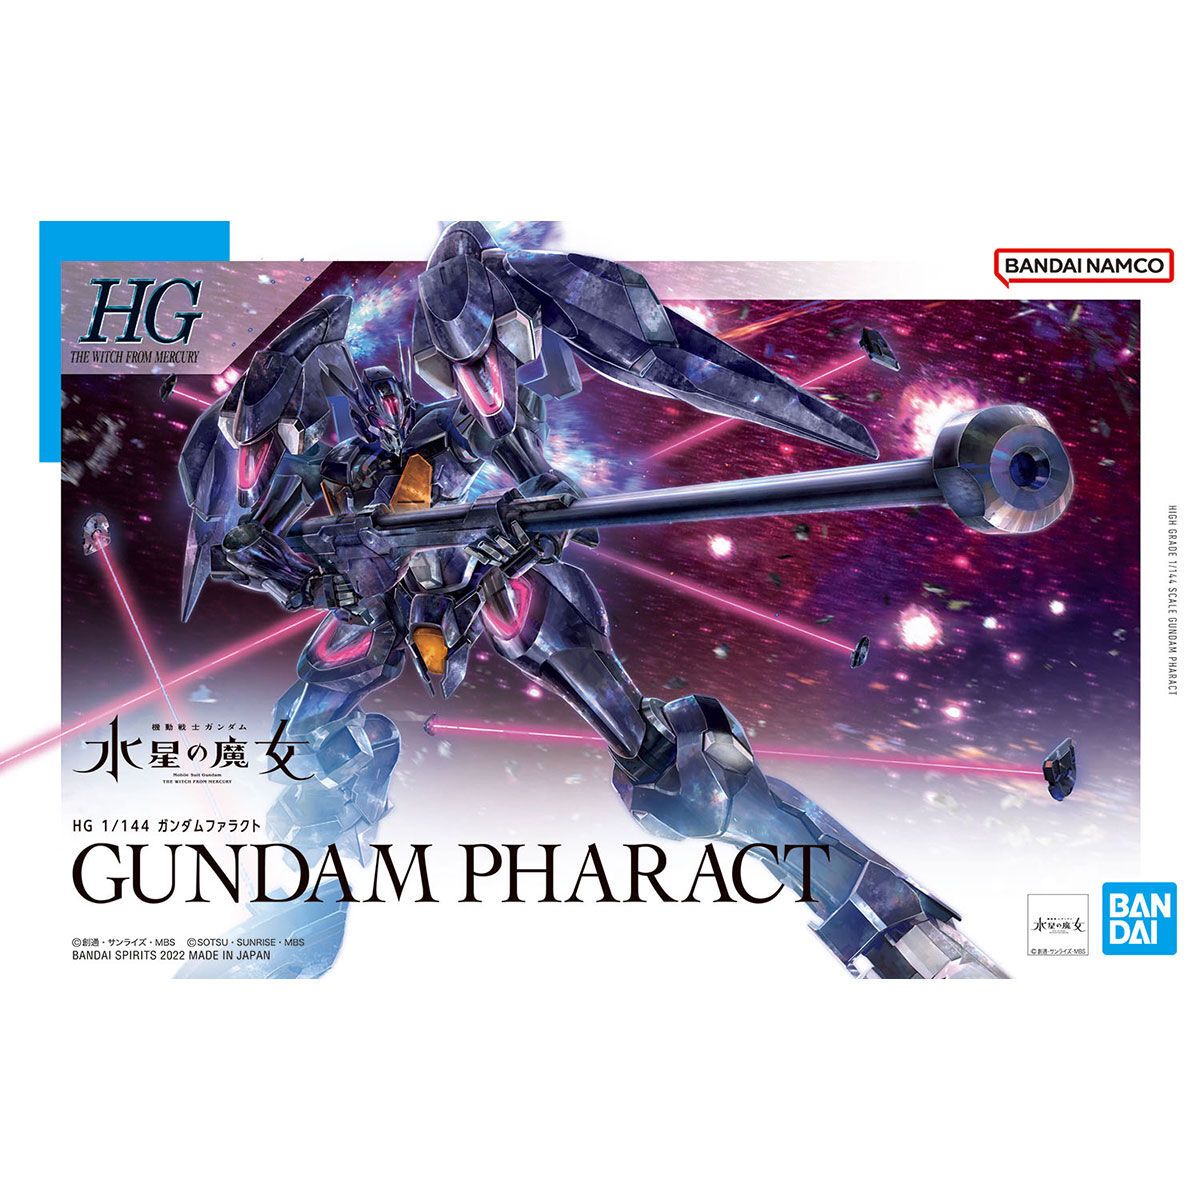 Bandai 1/144 Scale HG Gundam Pharact Model Kit